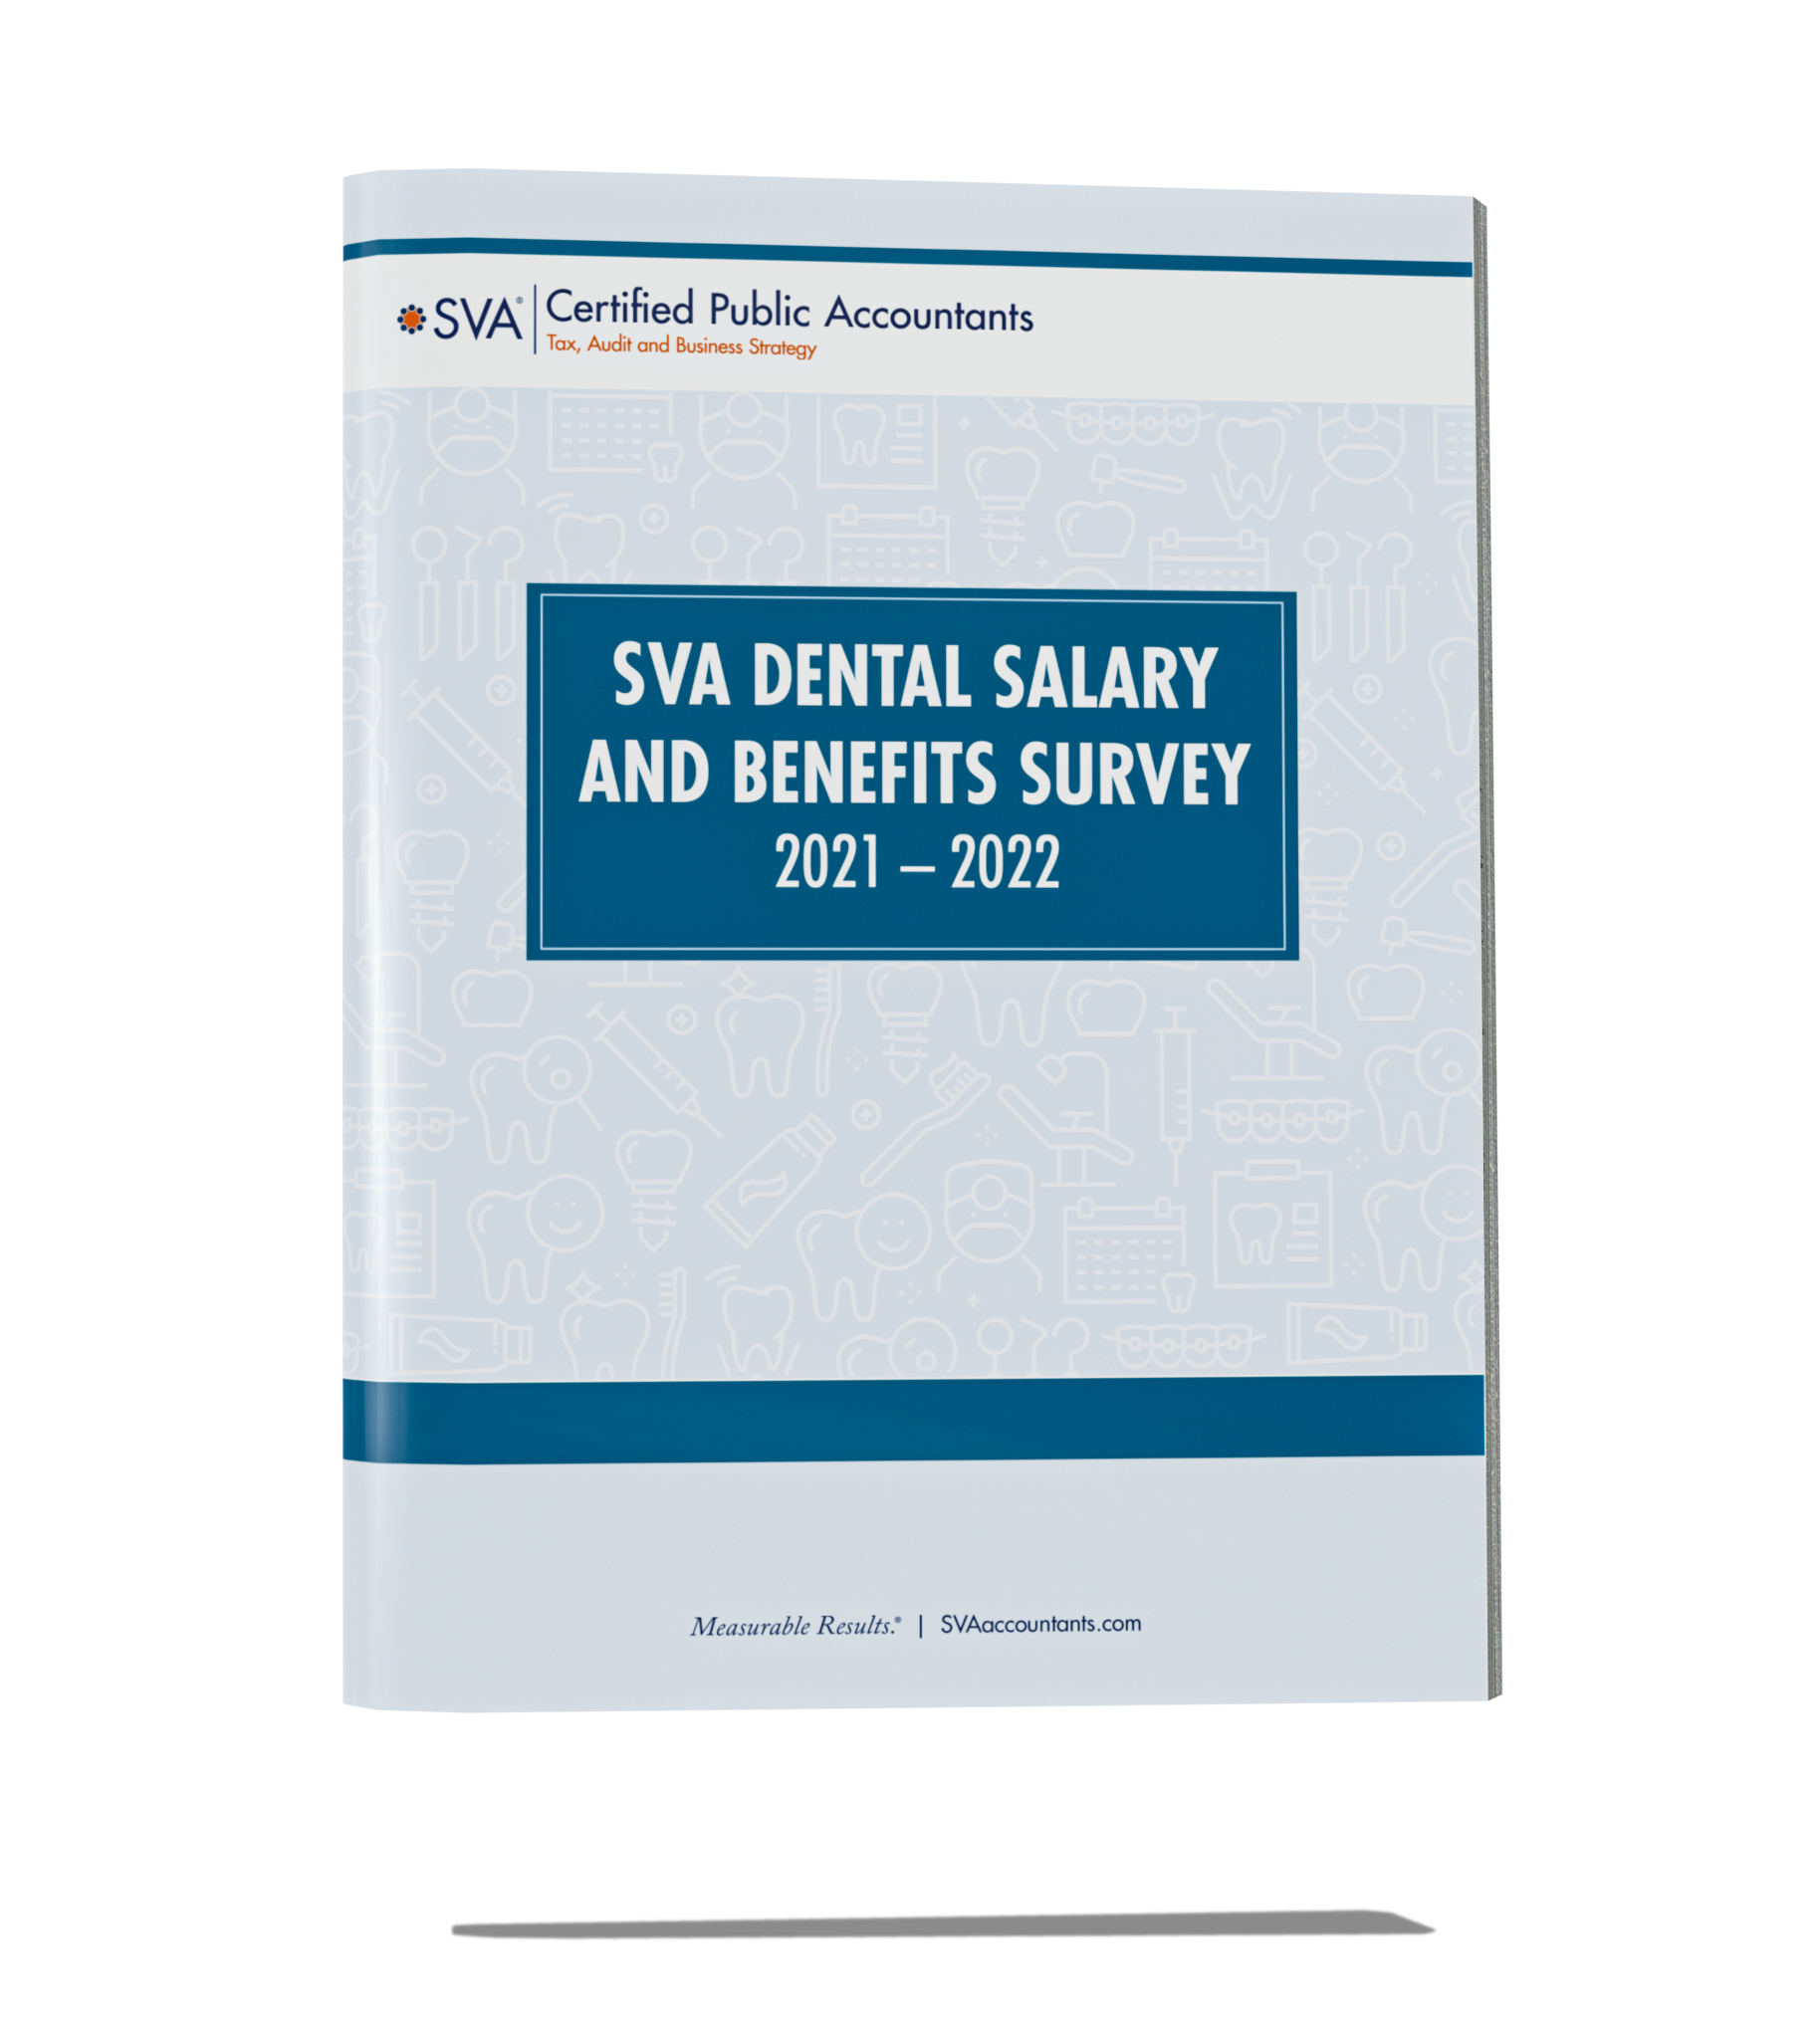 SVA Dental Salary and Benefits Survey